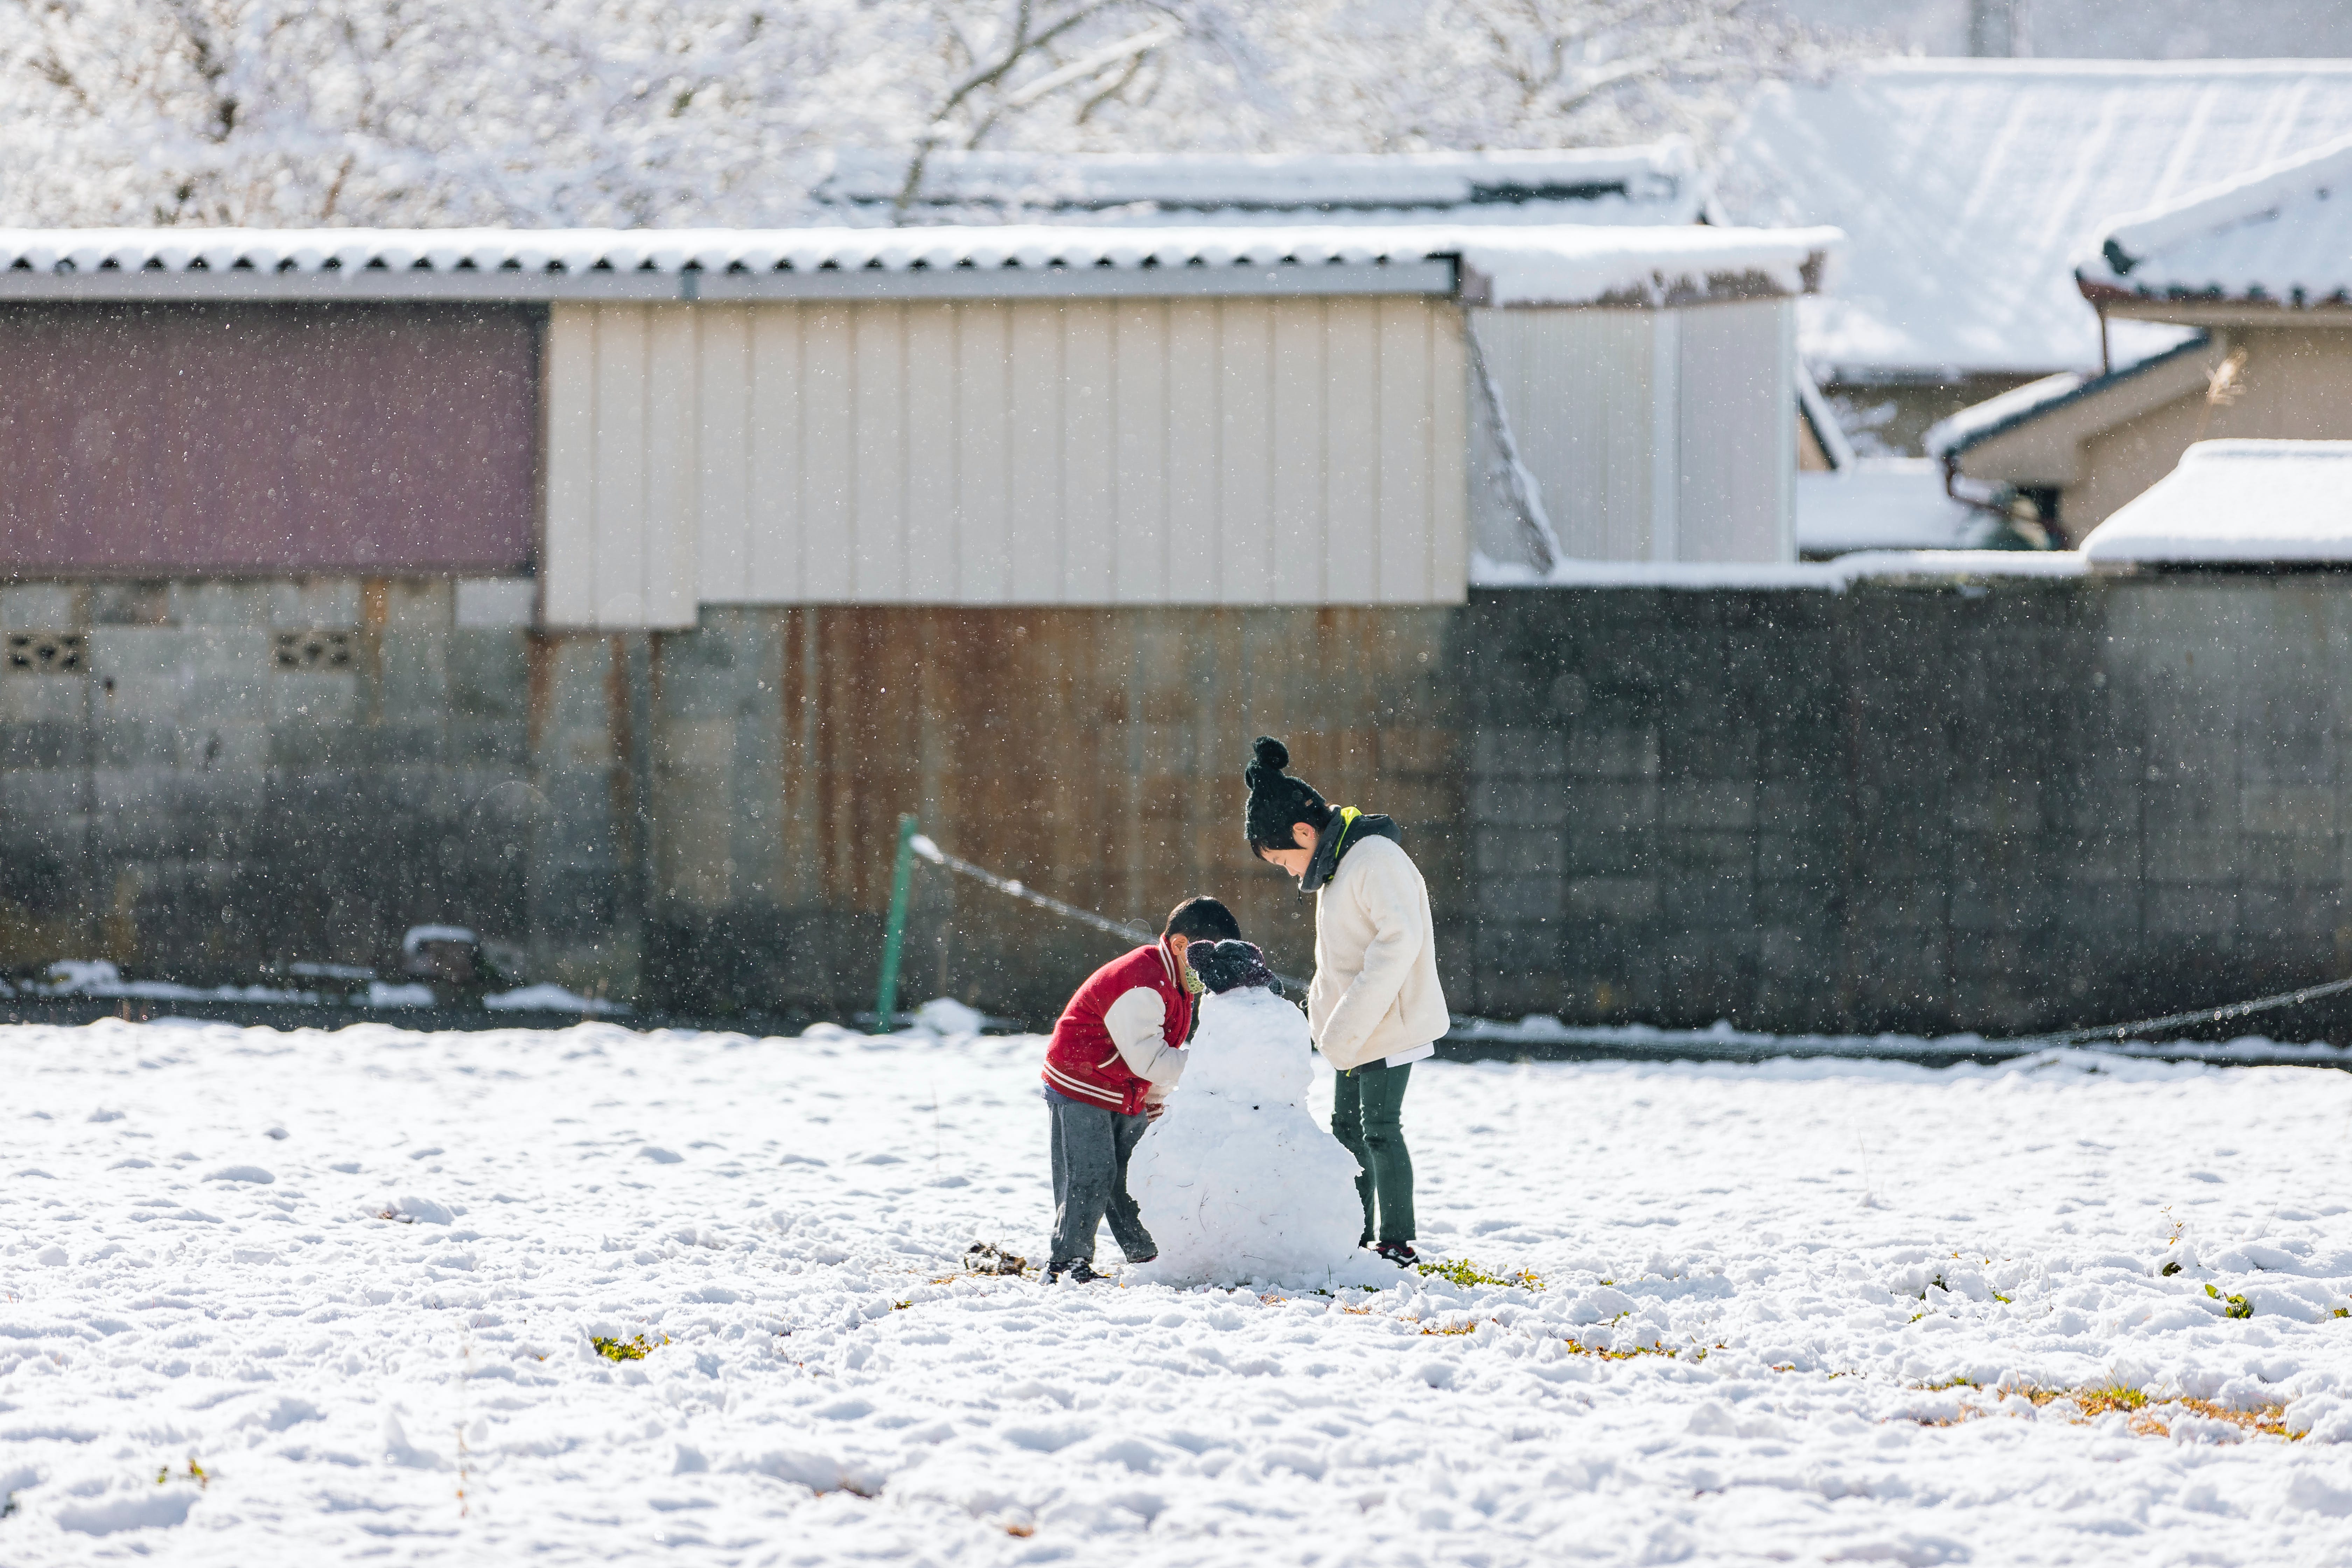 Best Christmas Games For Preschoolers - Snowman Building Contest